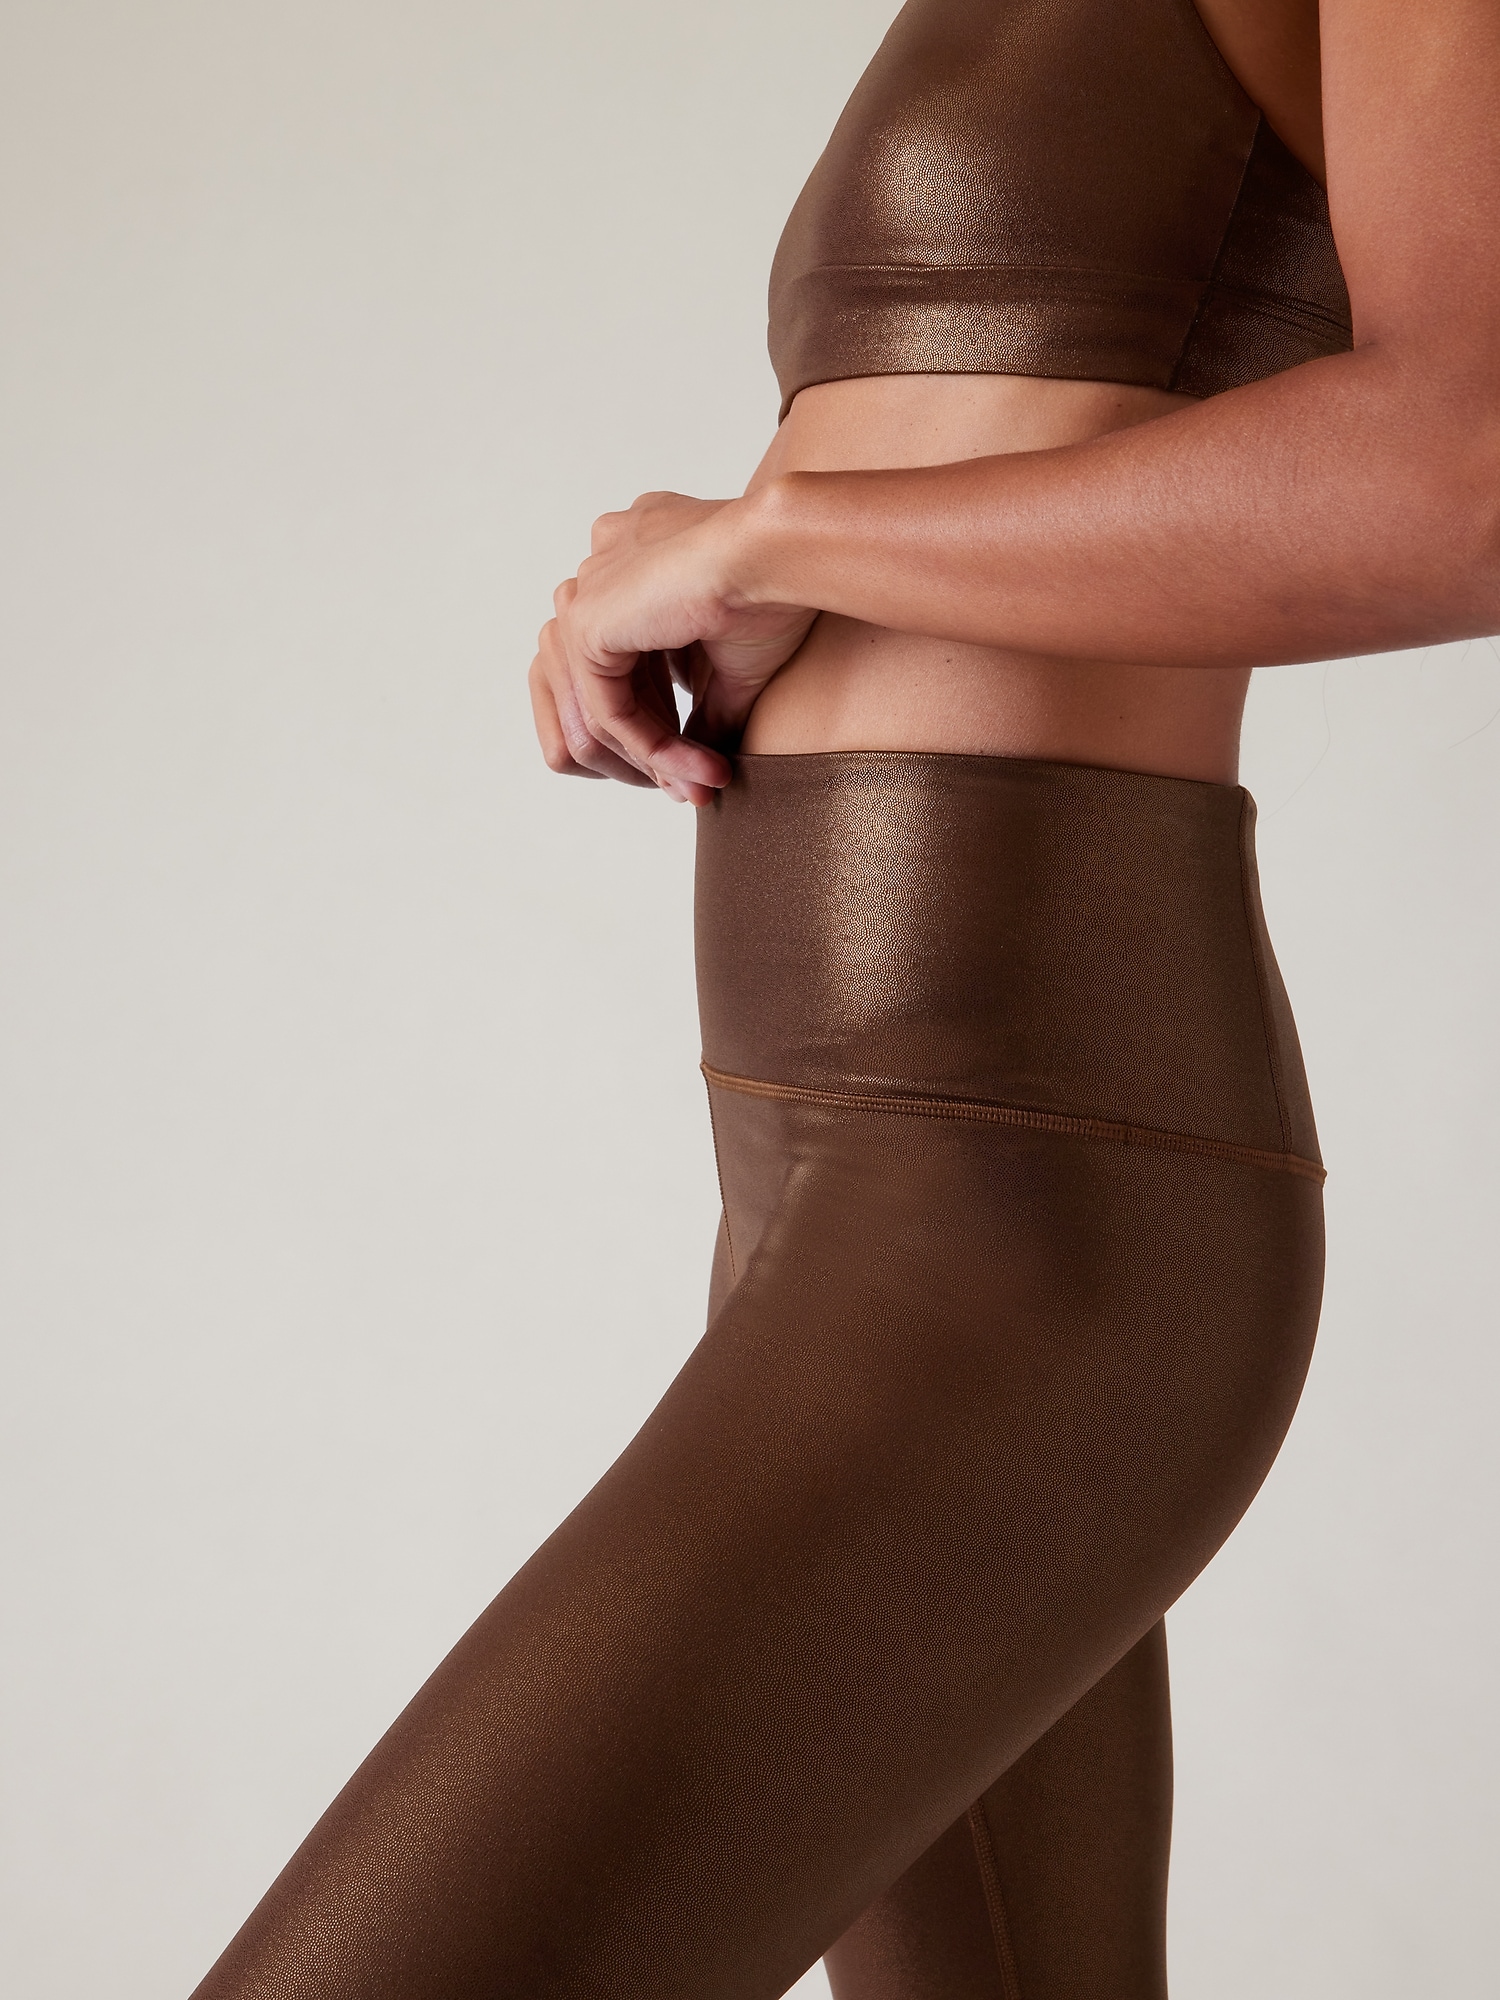 SPANX Leather Legging, Bronze - Pants & Leggings - Bottoms - The